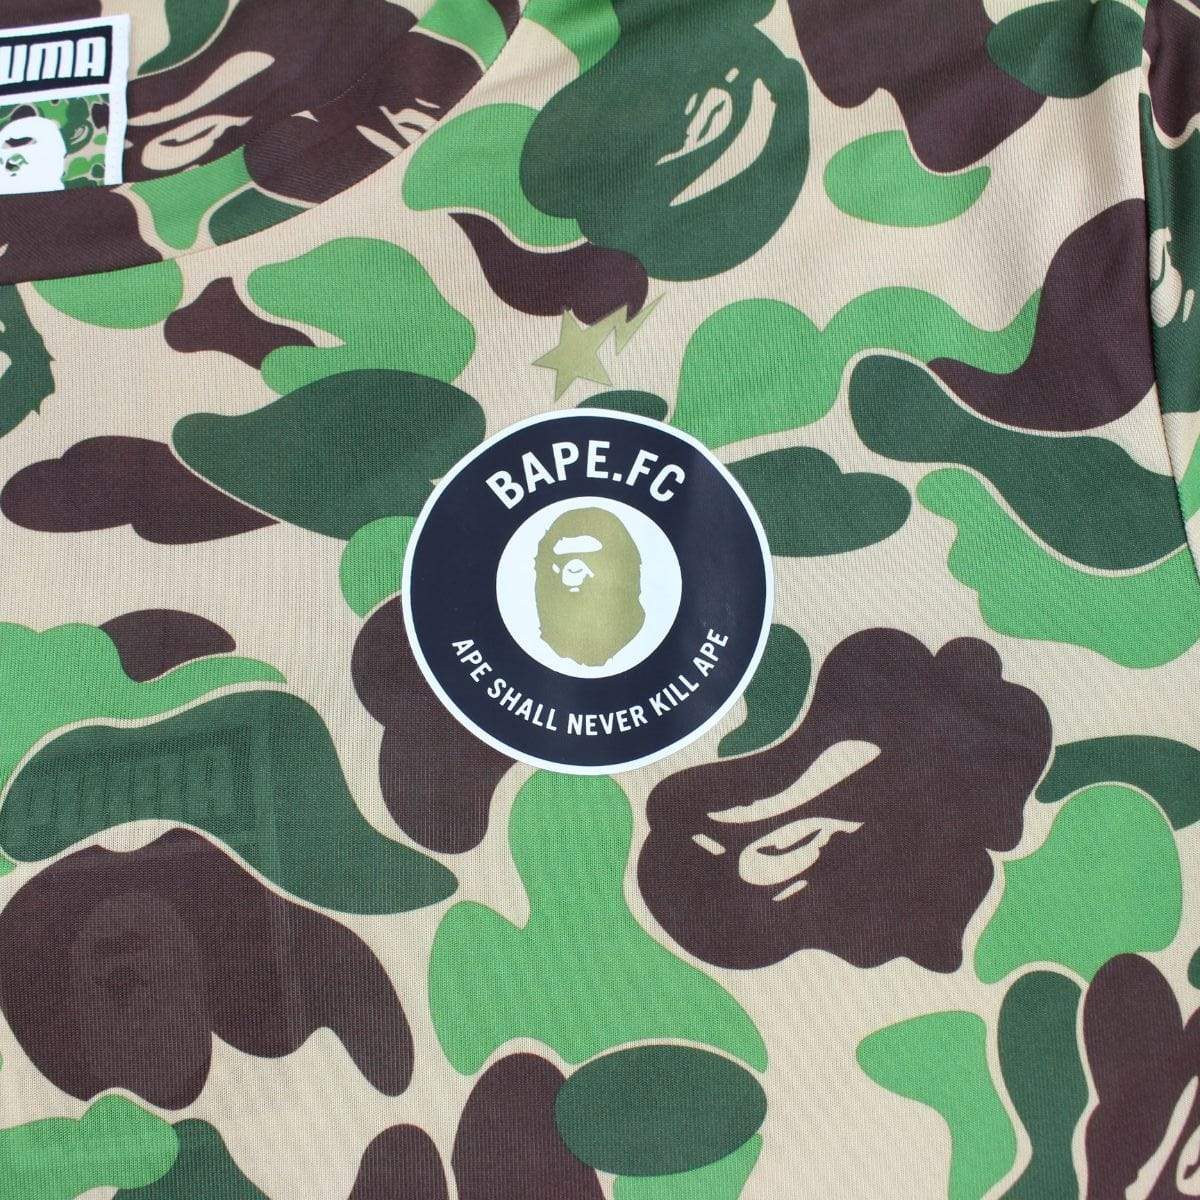 Bape x Puma ABC Green Camo football jersey 2015 - SaruGeneral